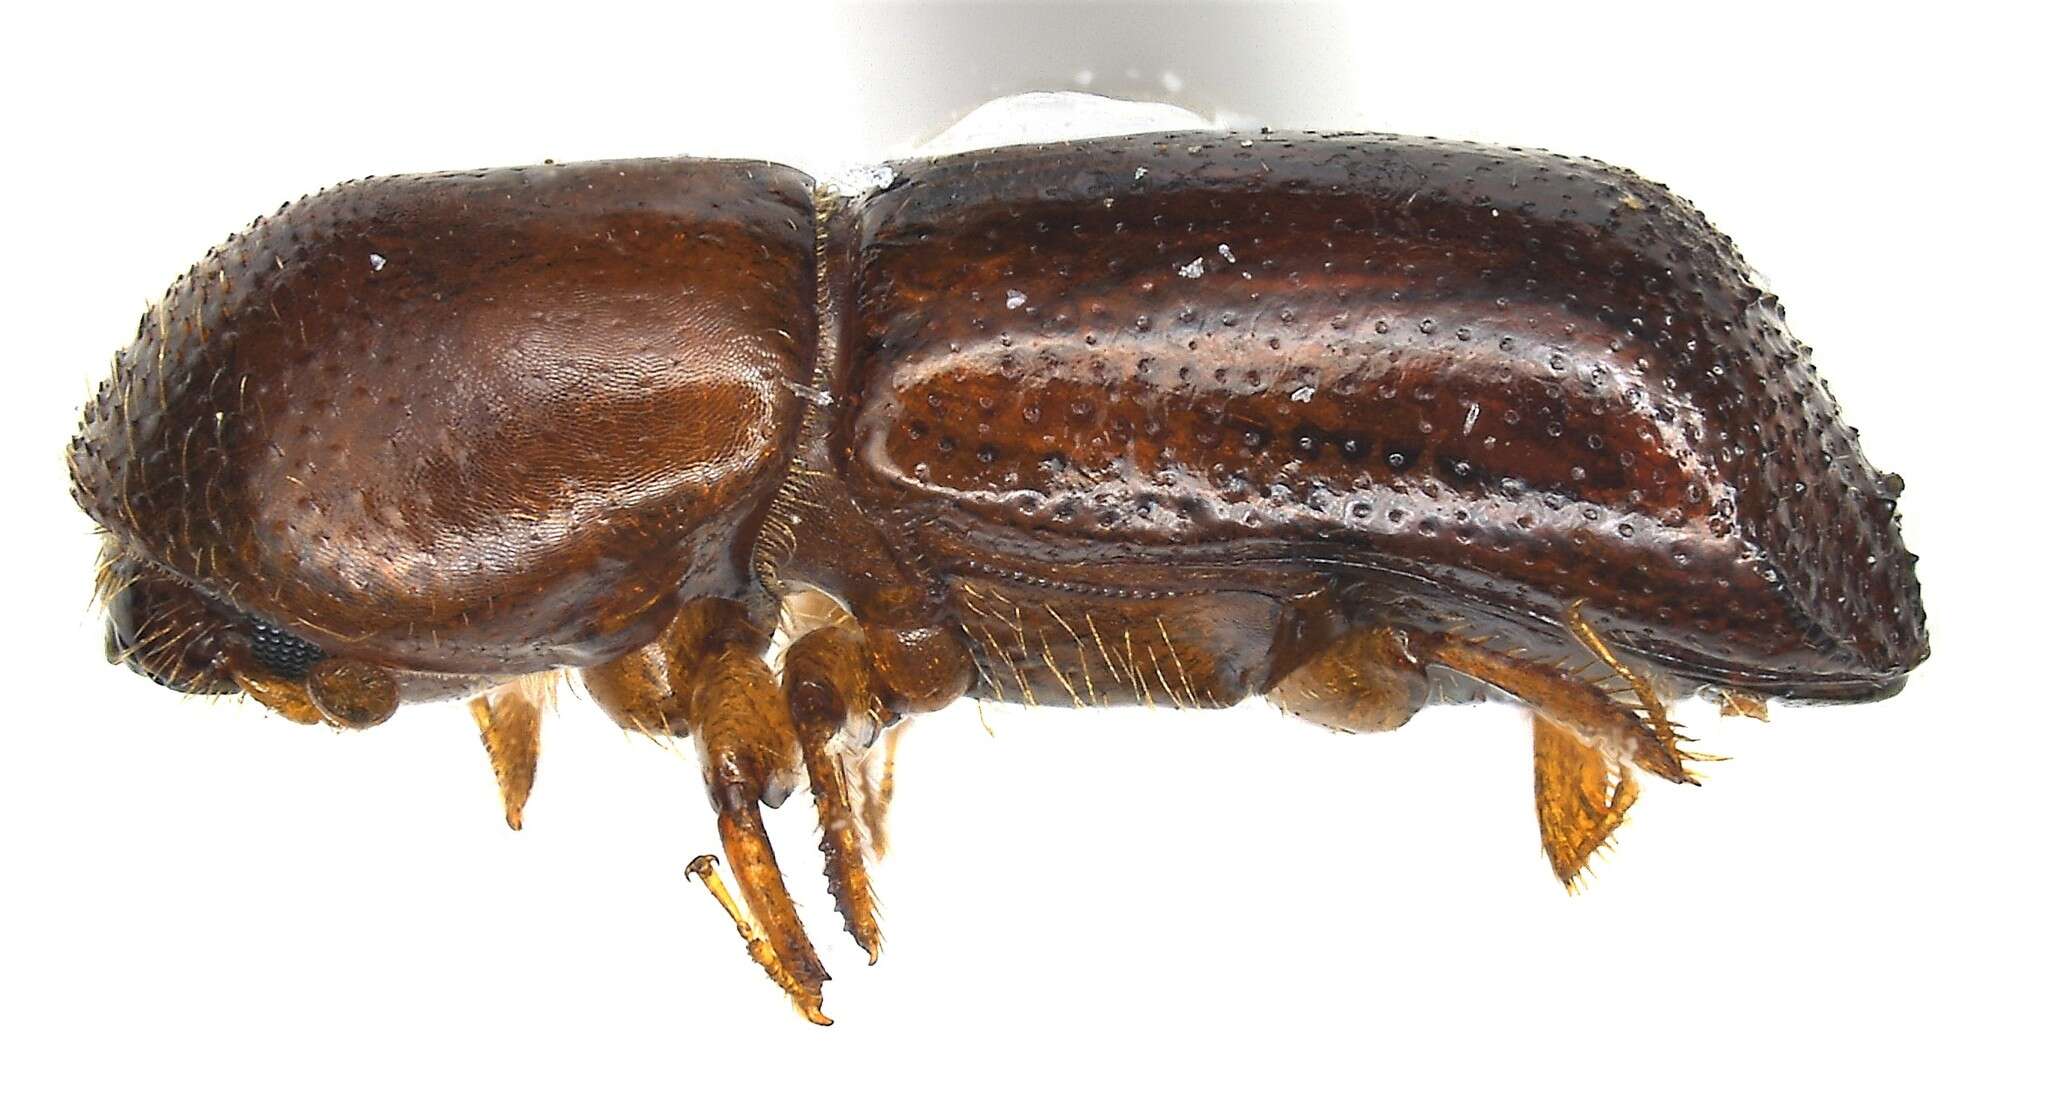 Image of Redbay Ambrosia Beetle